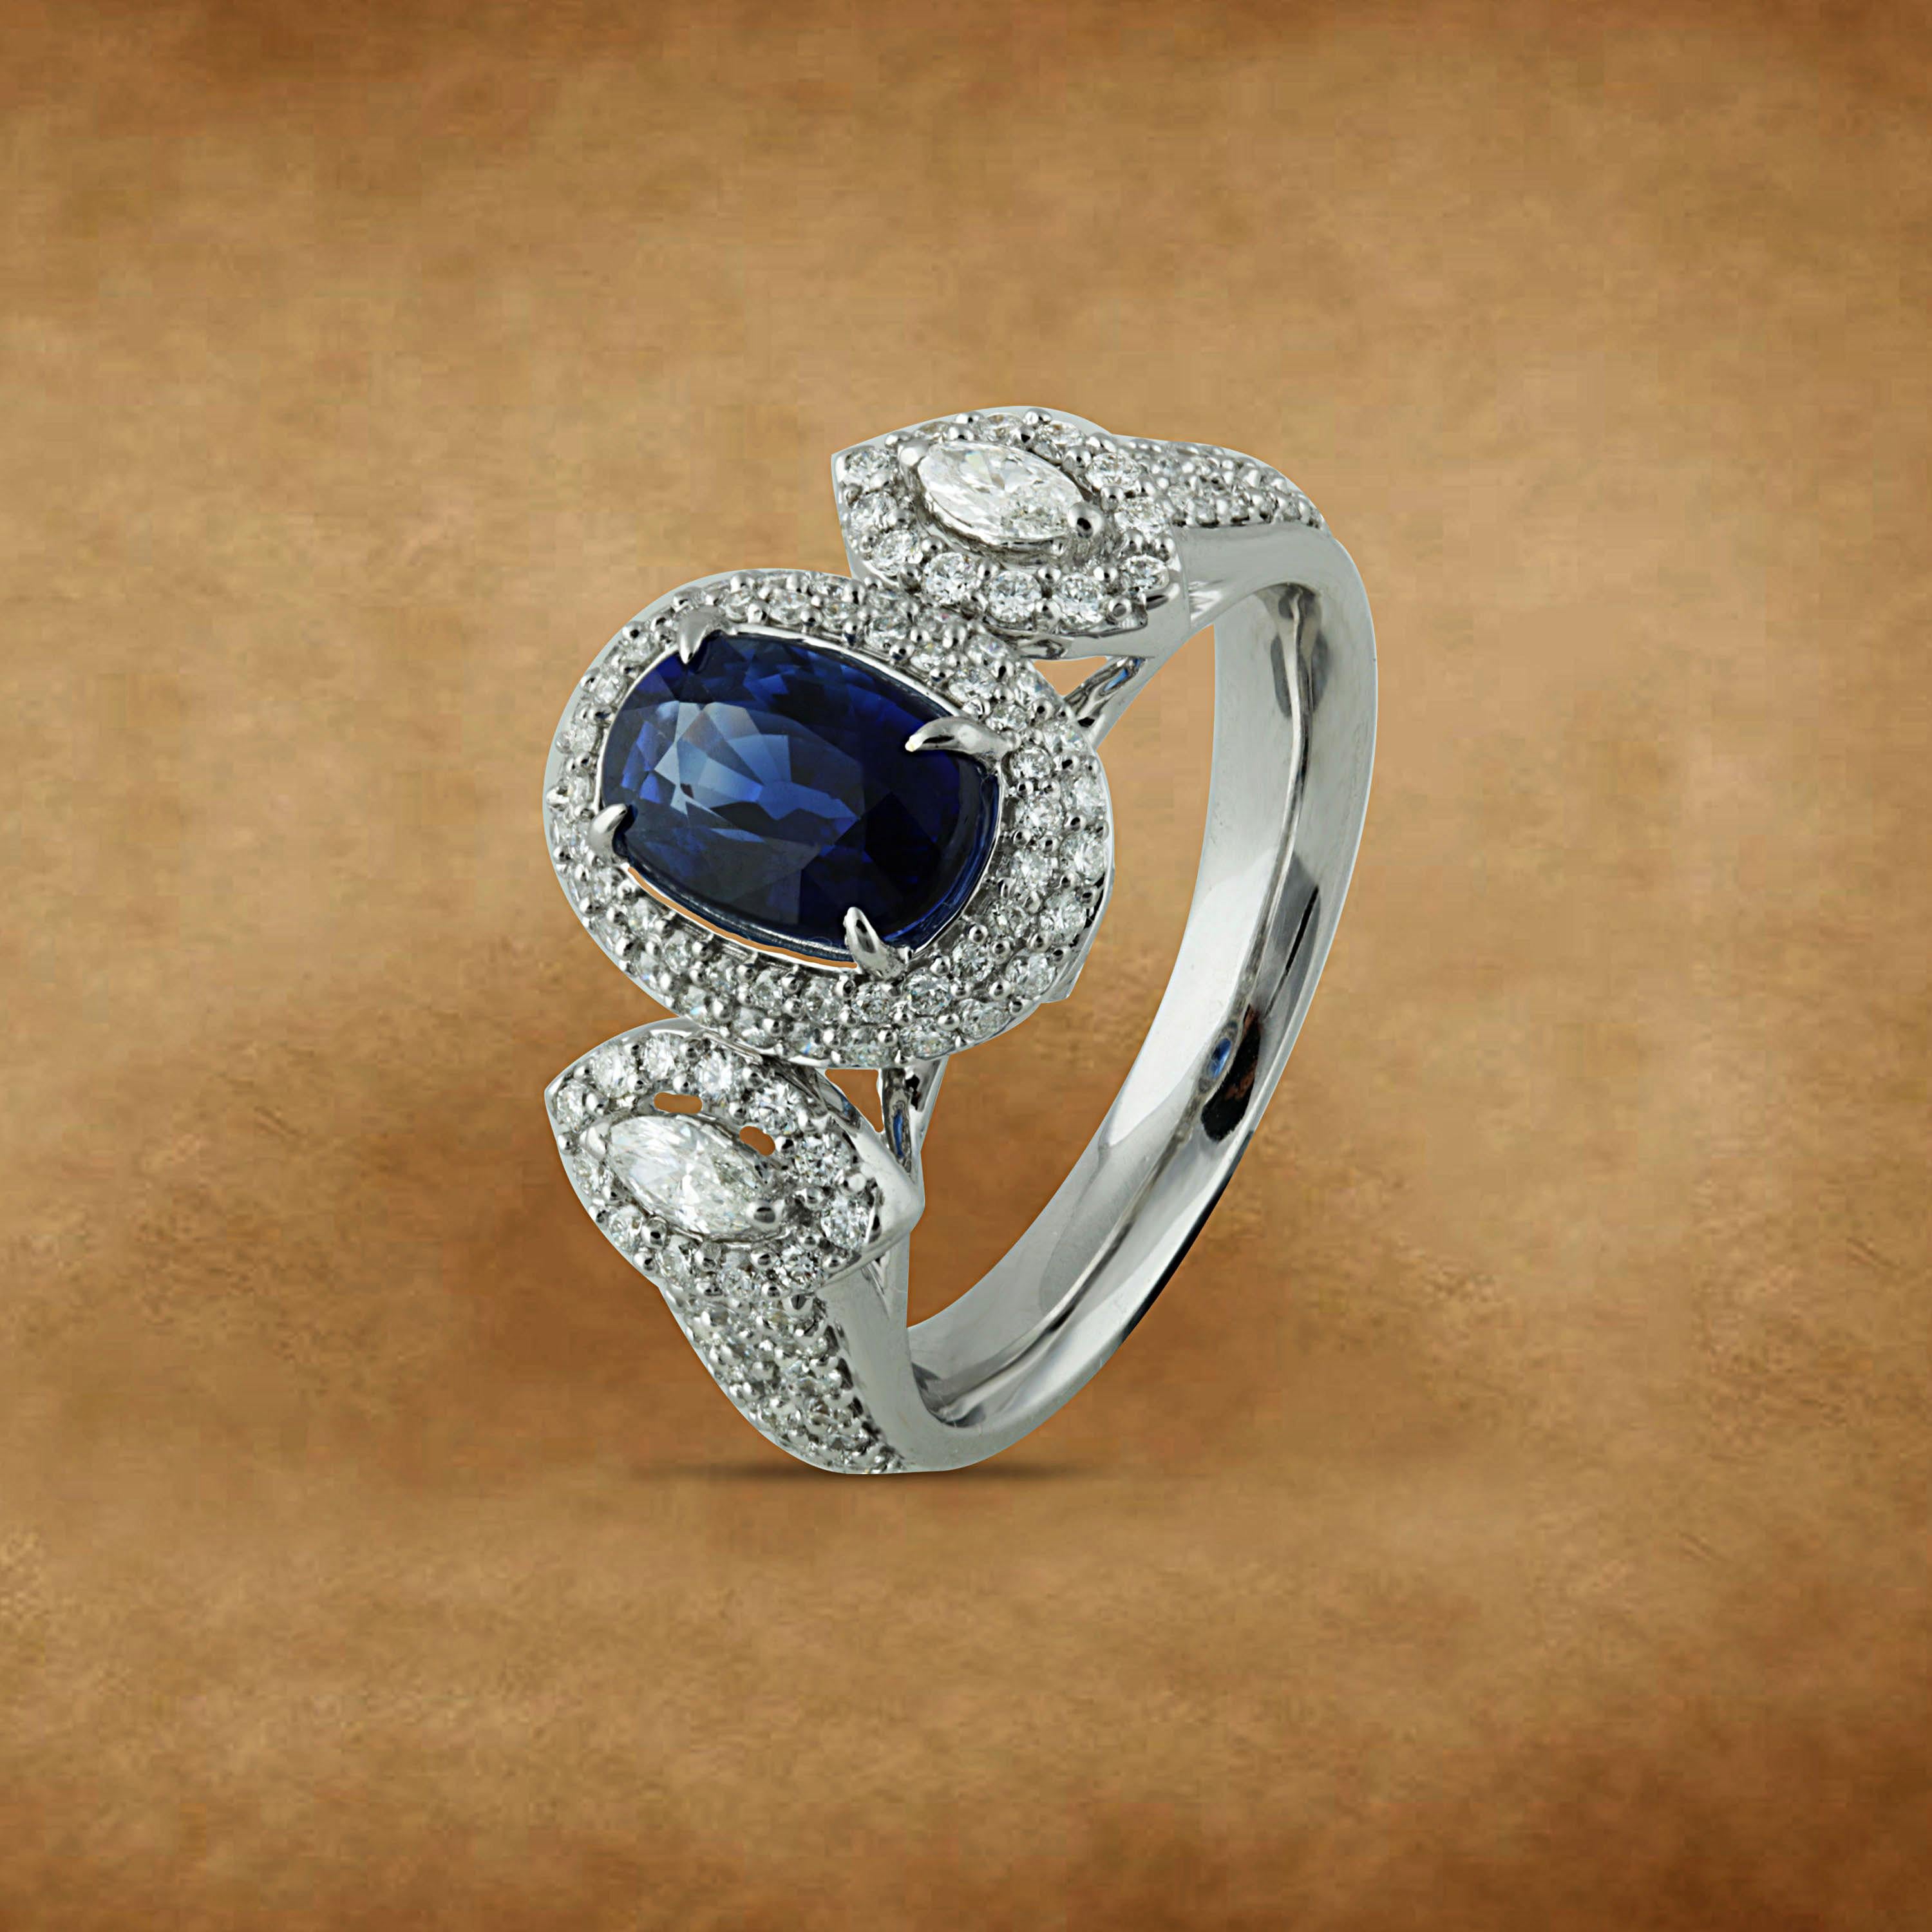 Women's Studio Rêves 1.68 Carat Blue Sapphire and Diamond Ring in 18 Karat White Gold